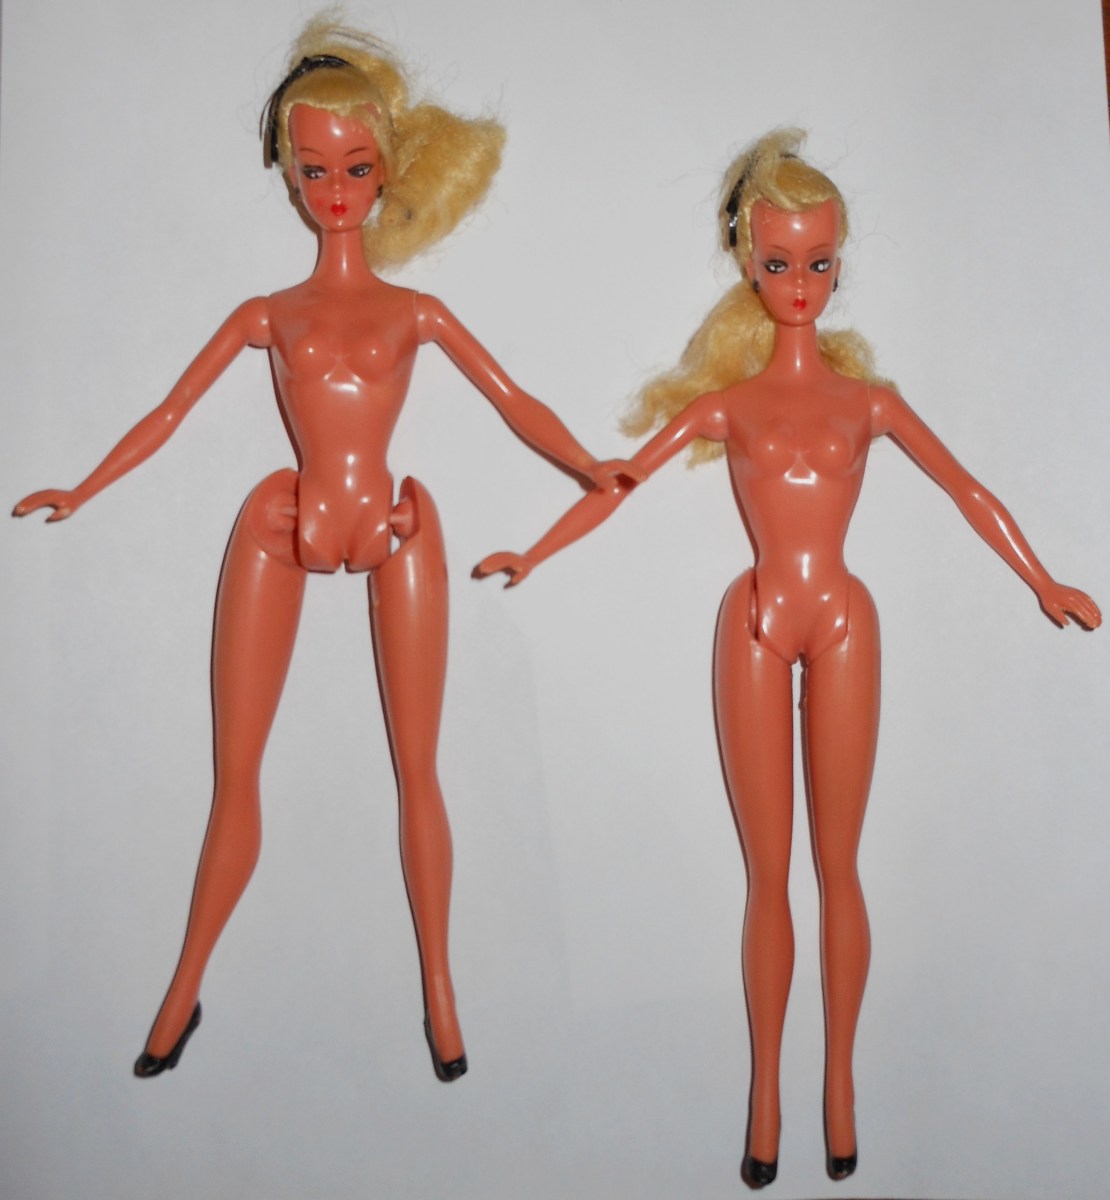 Bild Lilli was basically a Barbie prototype.